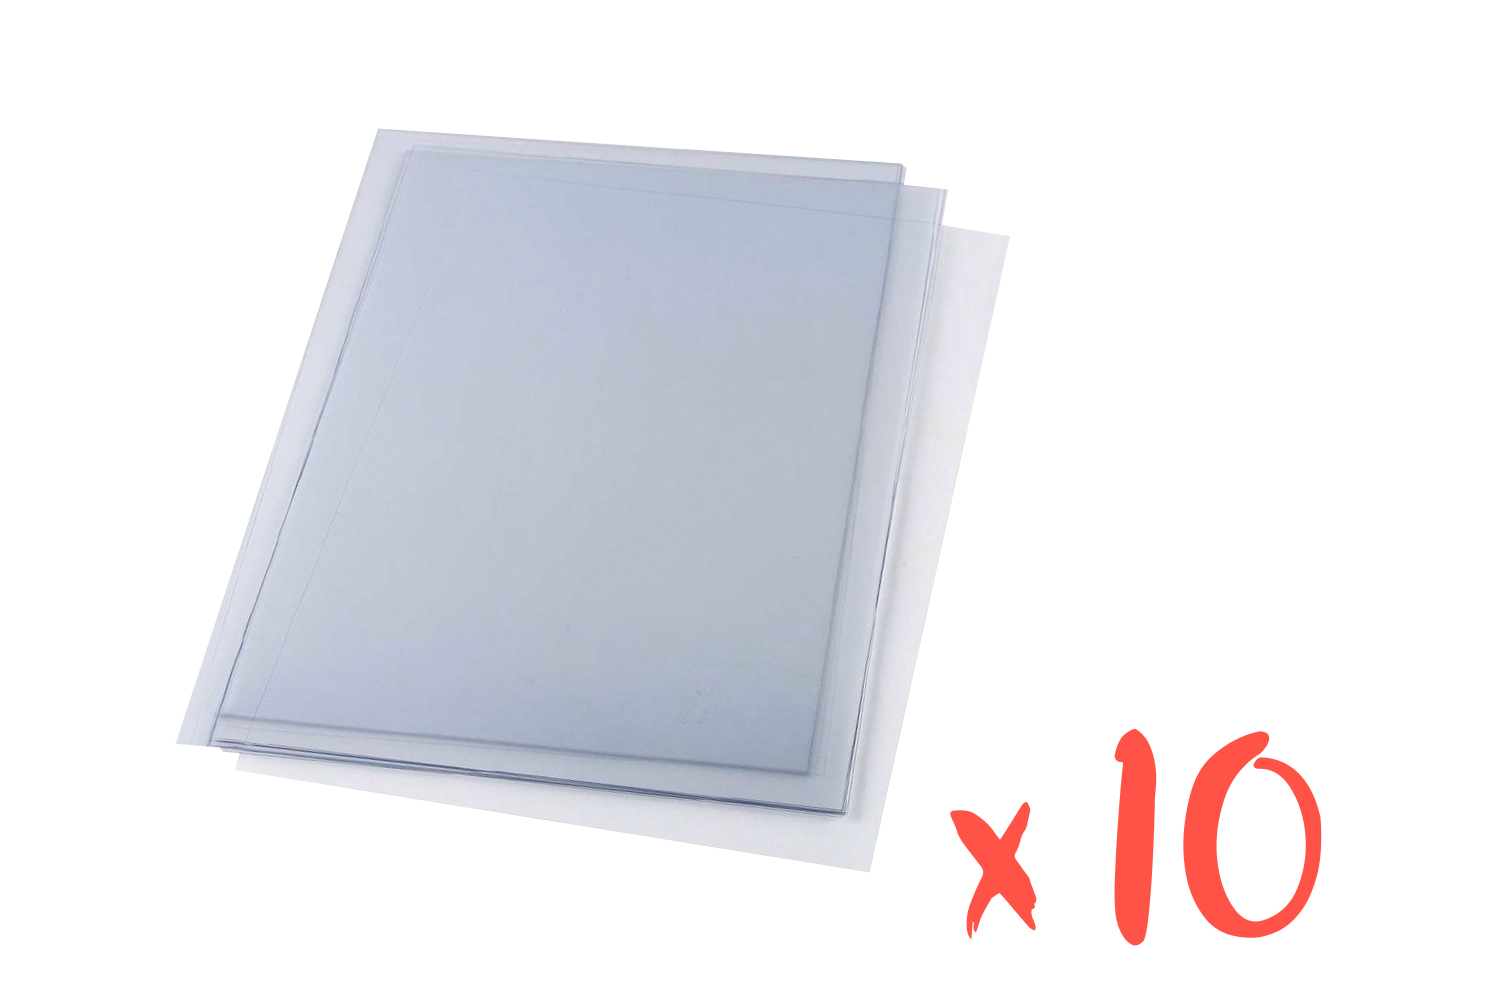 Plastique rhodoïd transparent - 10 feuilles - Film plastique